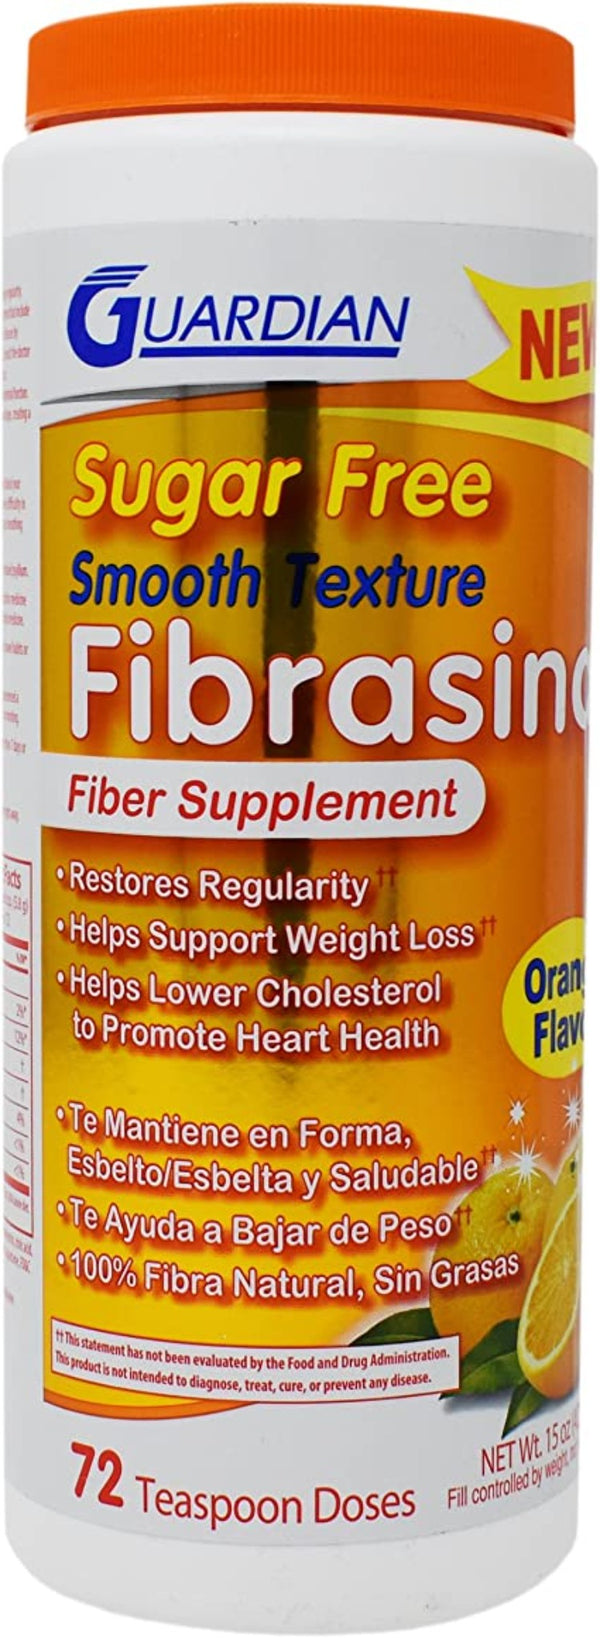 Fibrasina Fiber Supplement Orange 15 oz